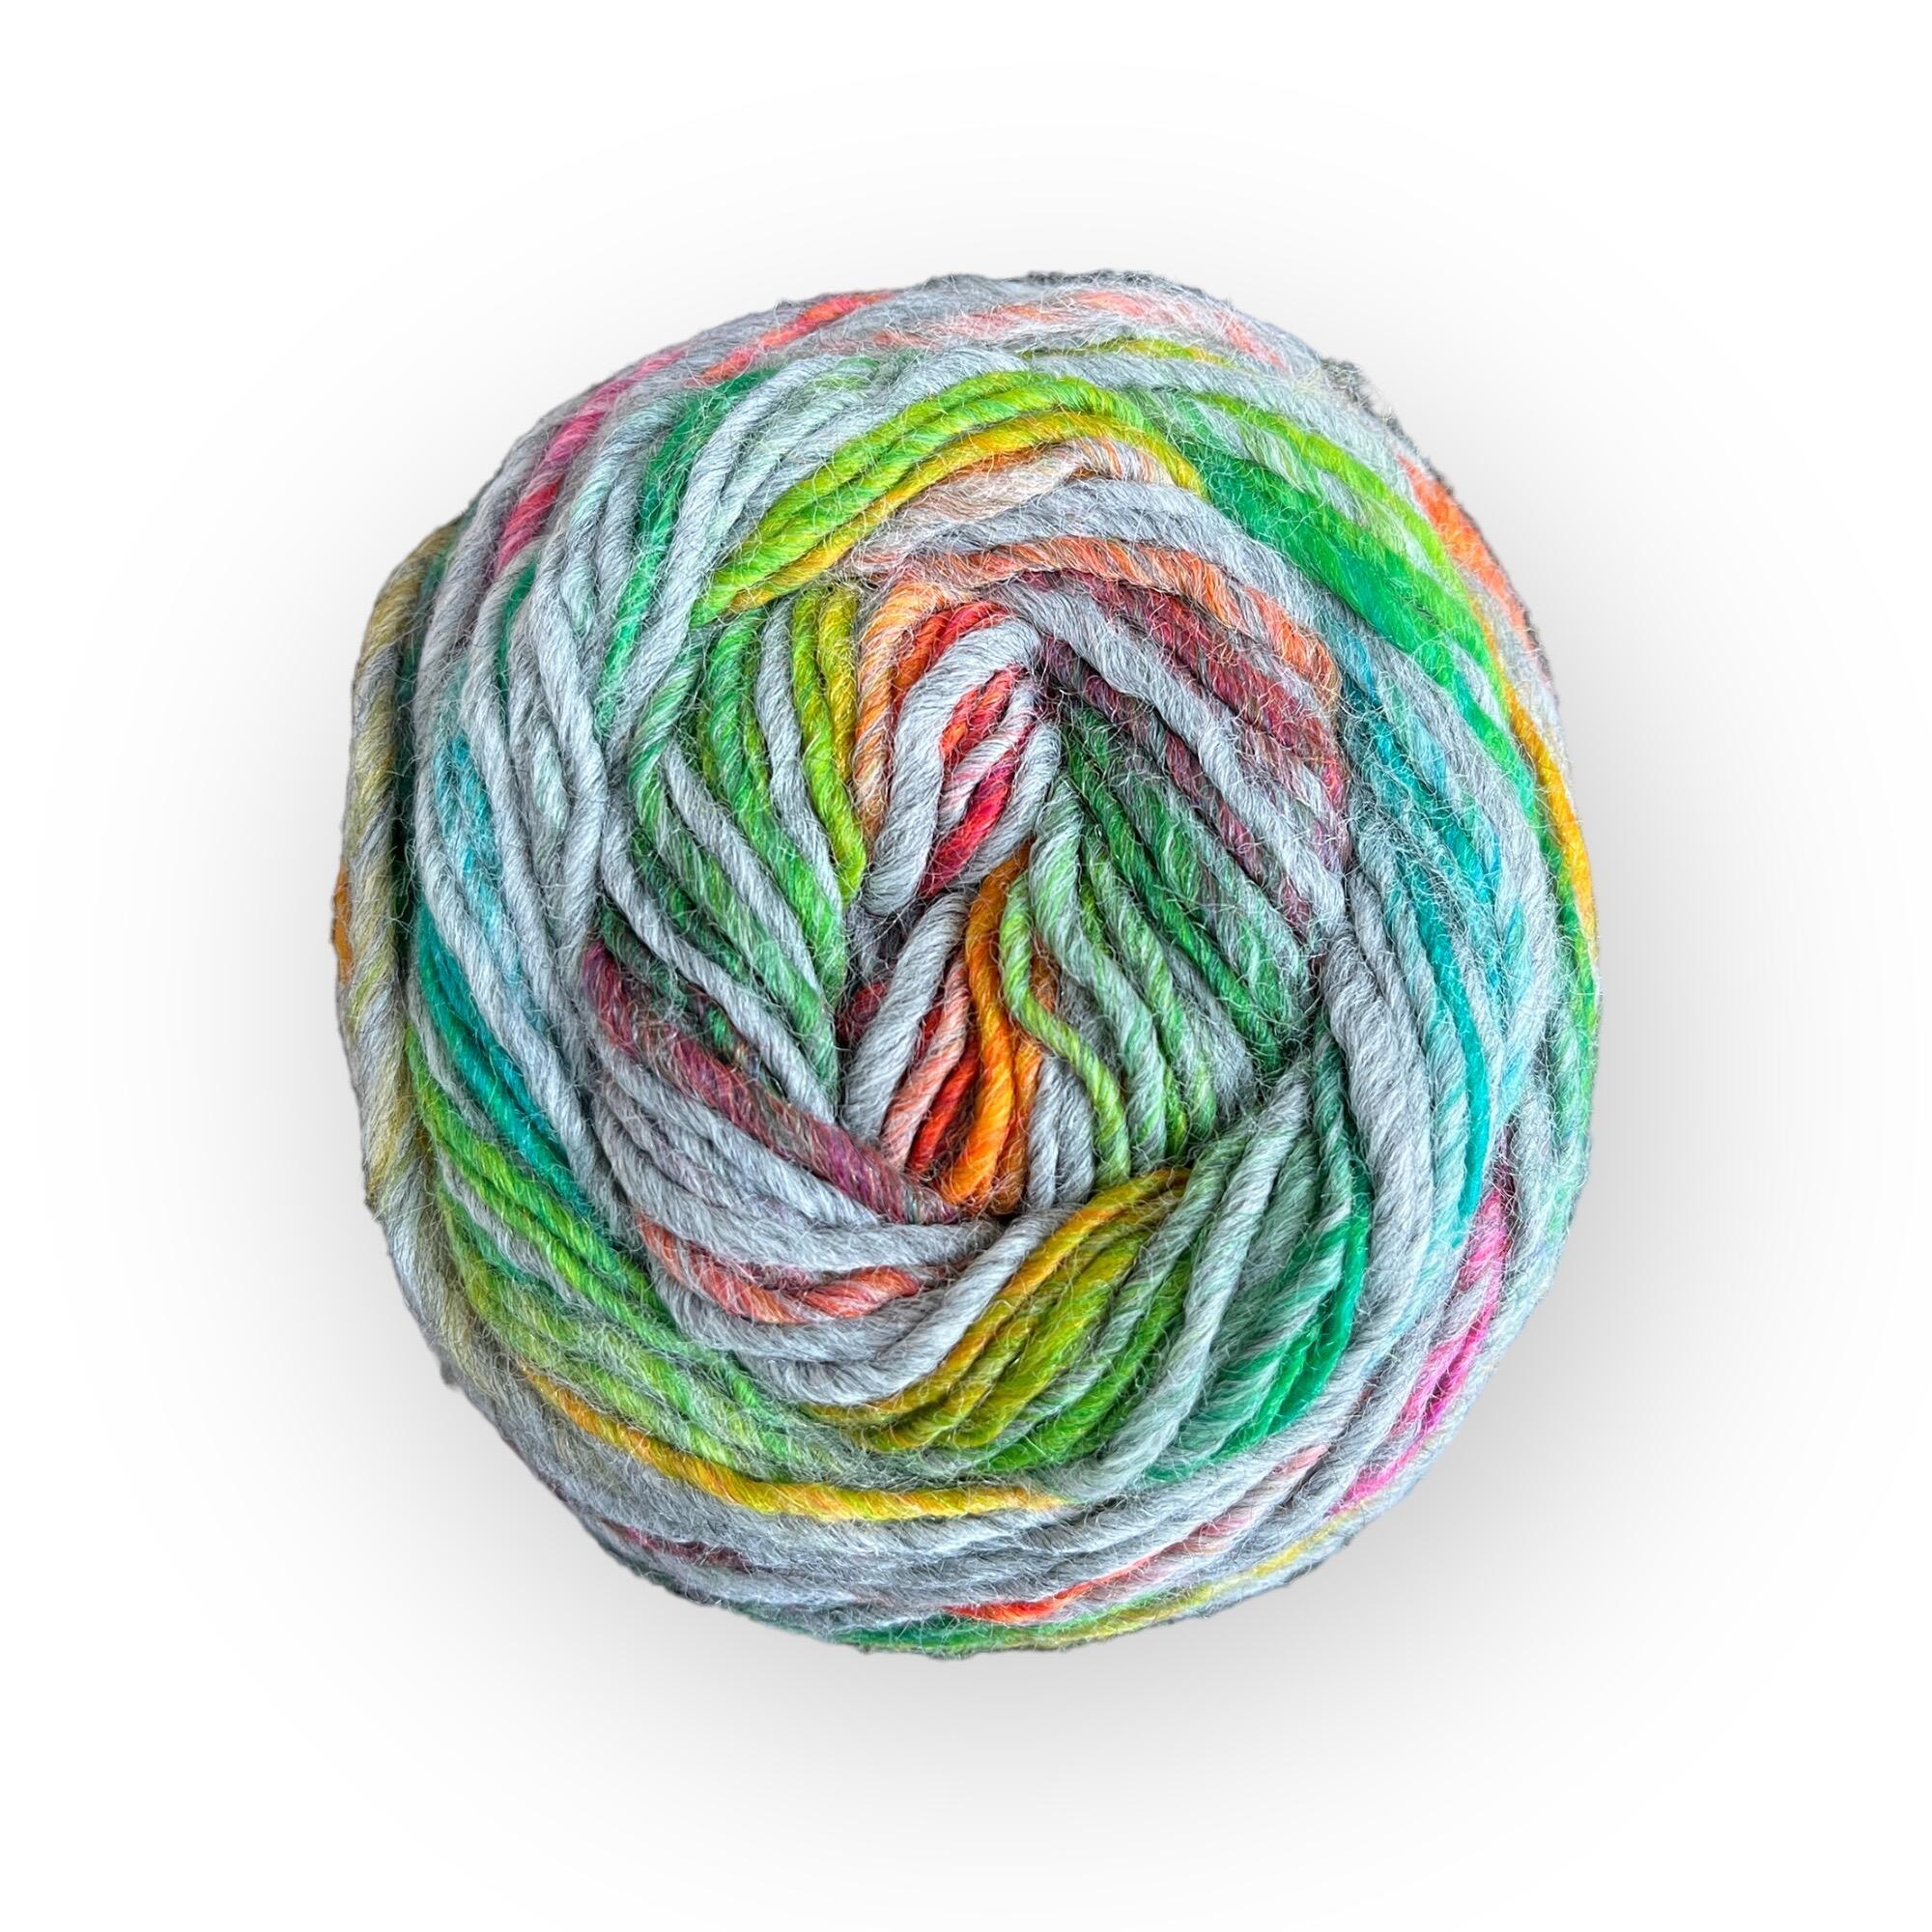 Stylecraft knit me crochet me yarn cake in the colour Rainbow 6151